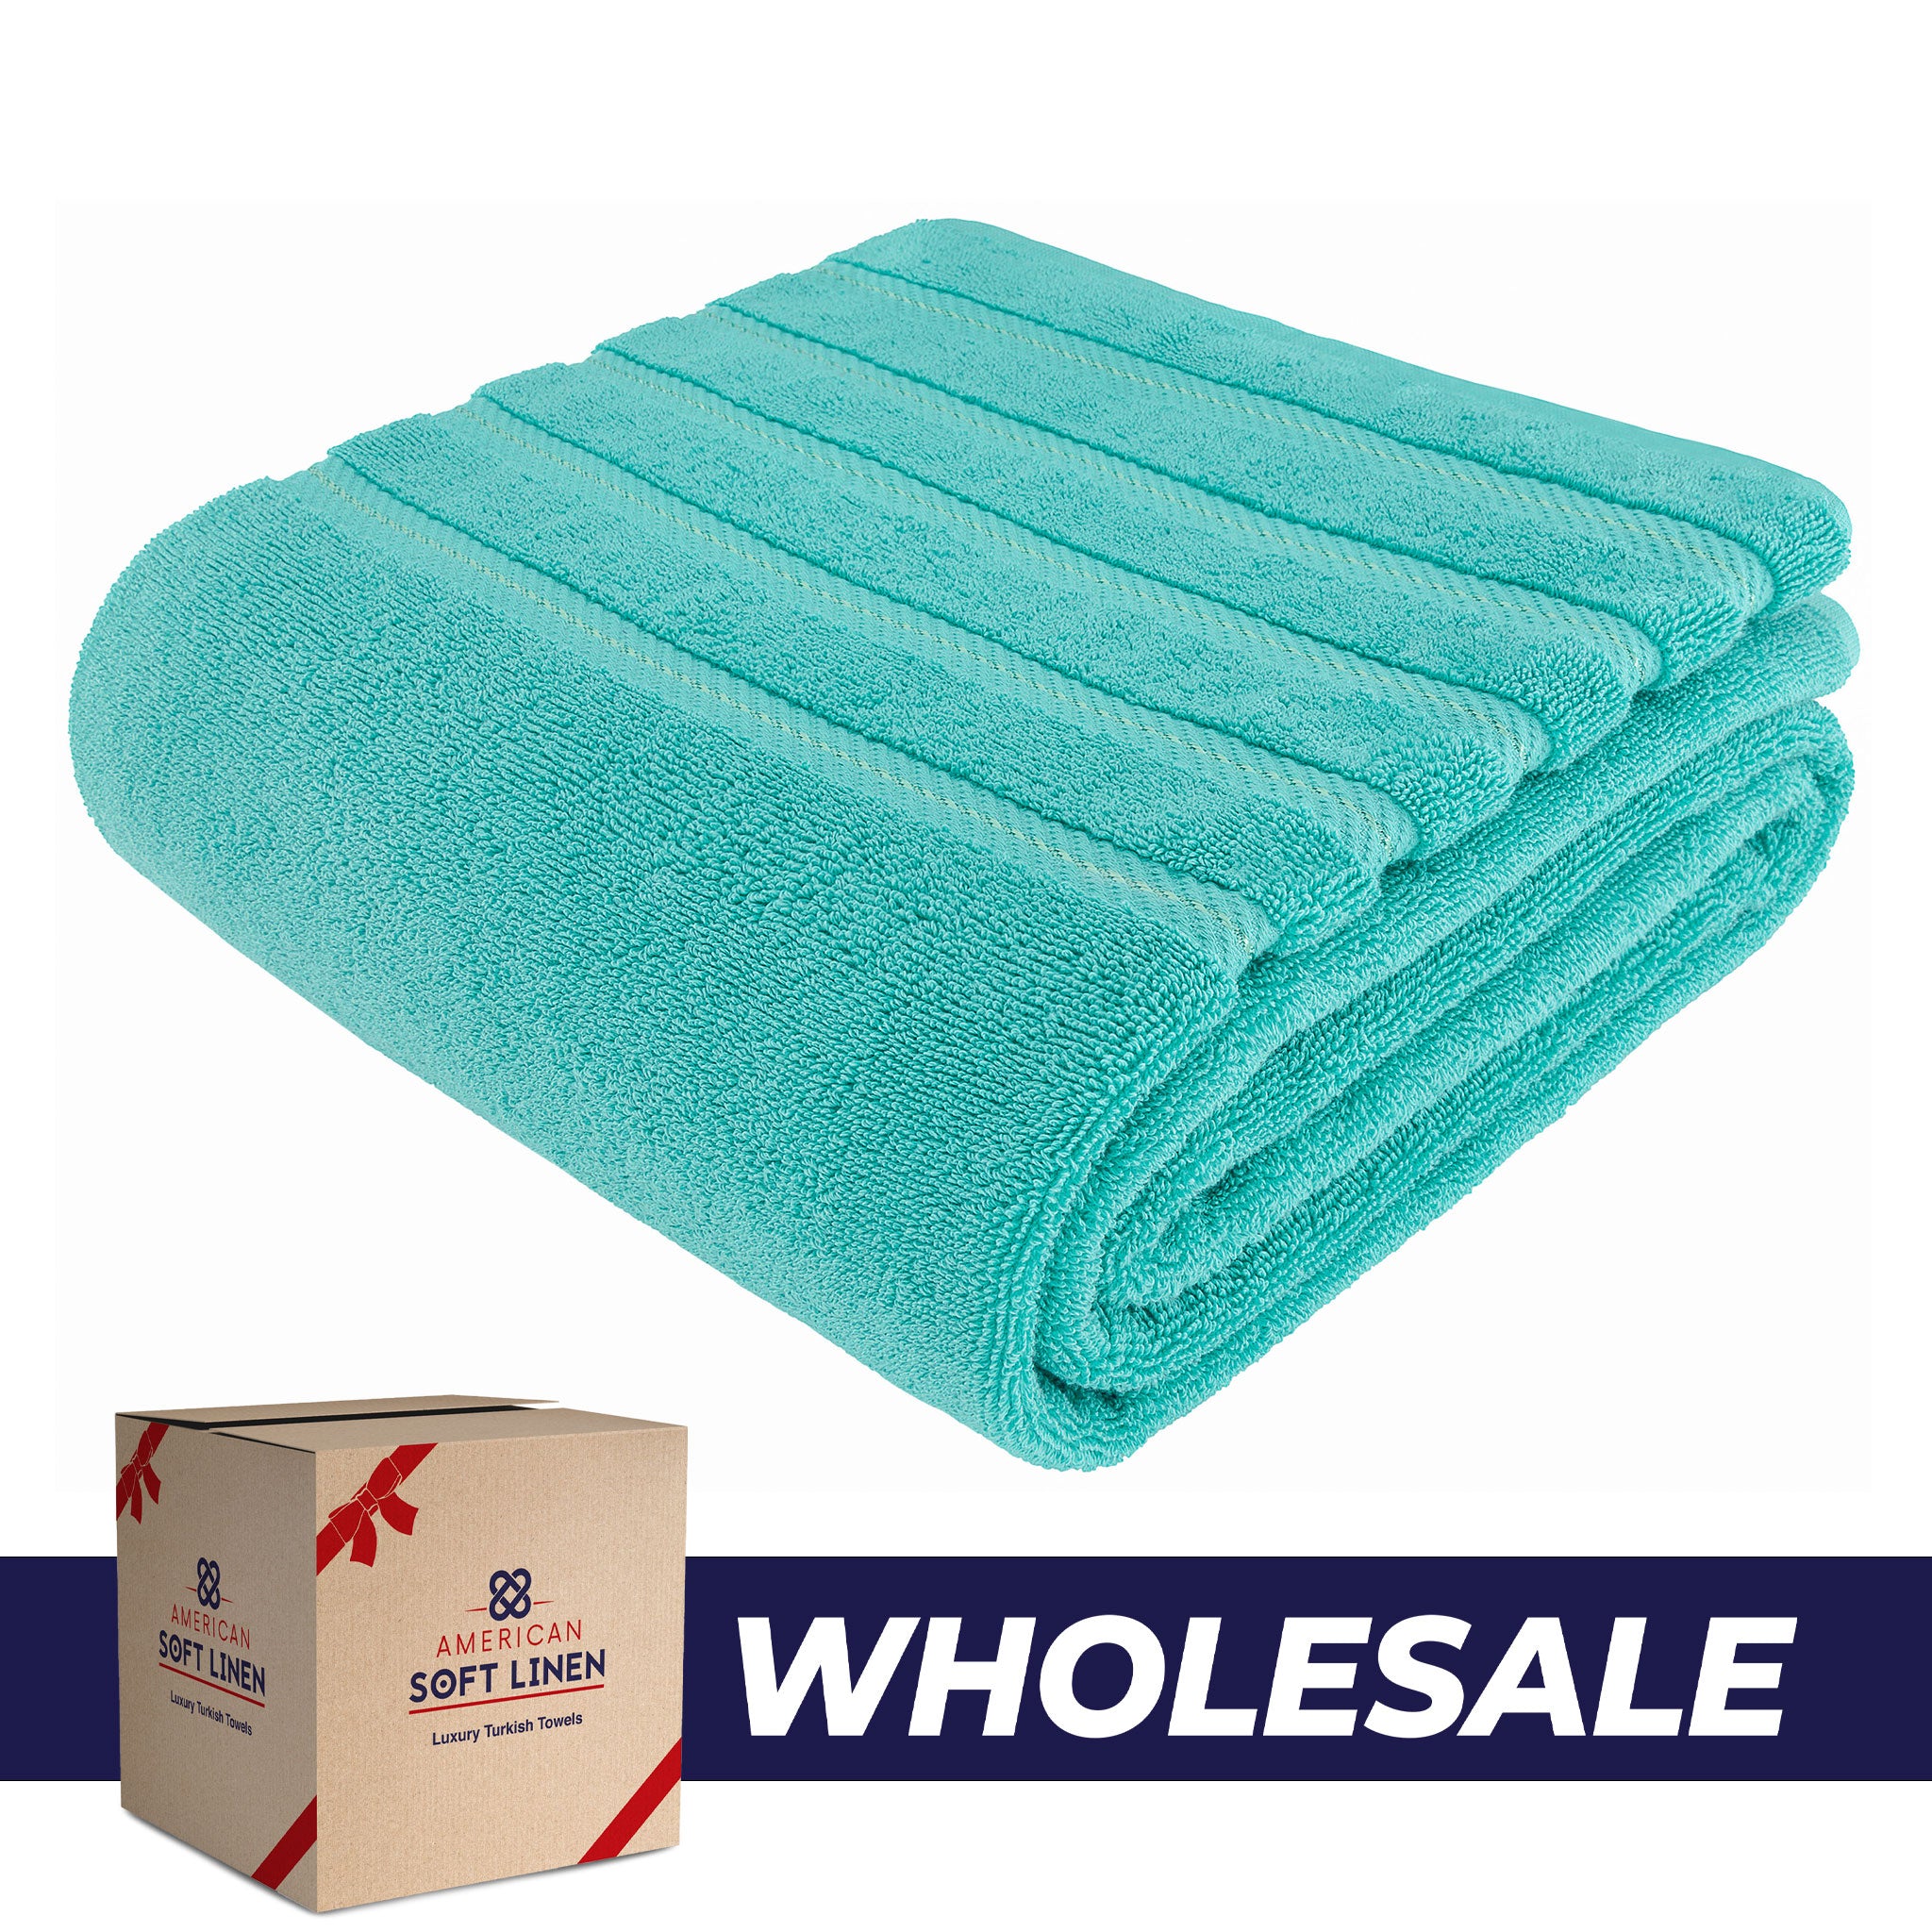 American Soft Linen - 35x70 Jumbo Bath Sheet Turkish Bath Towel - 16 Piece Case Pack - Turquoise-Blue - 0